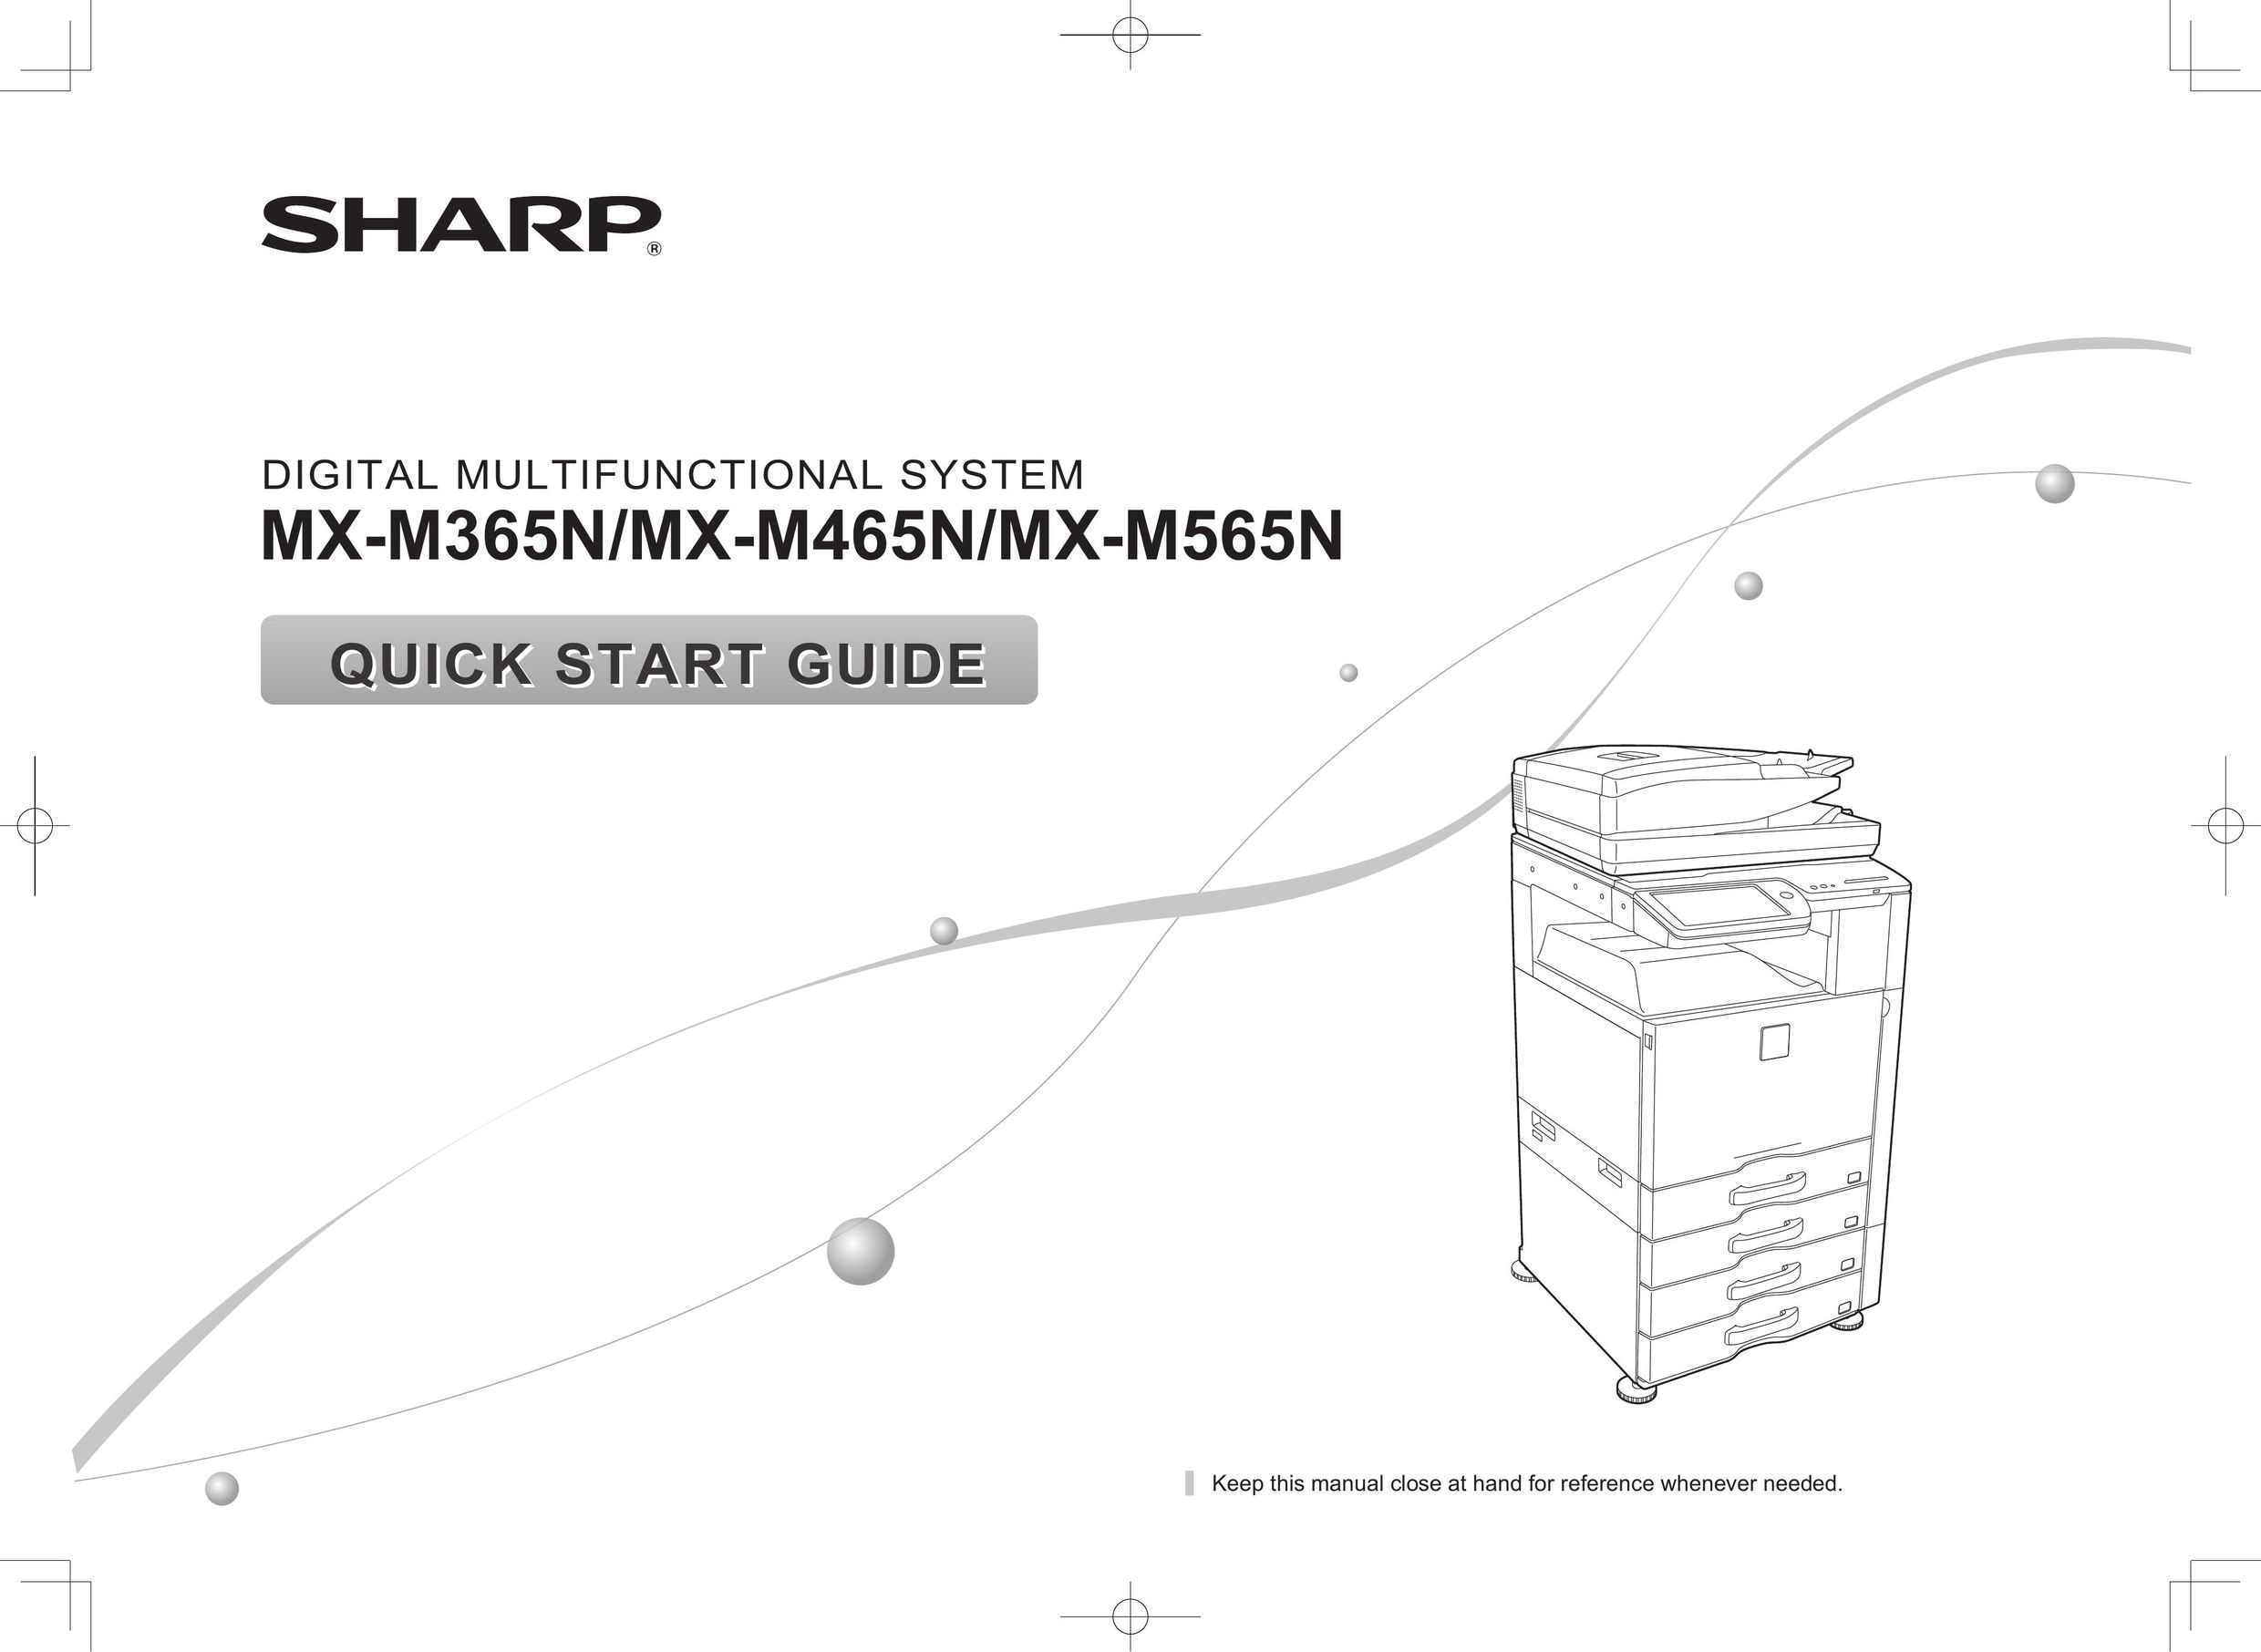 Sharp MX-M465N Fax Machine User Manual